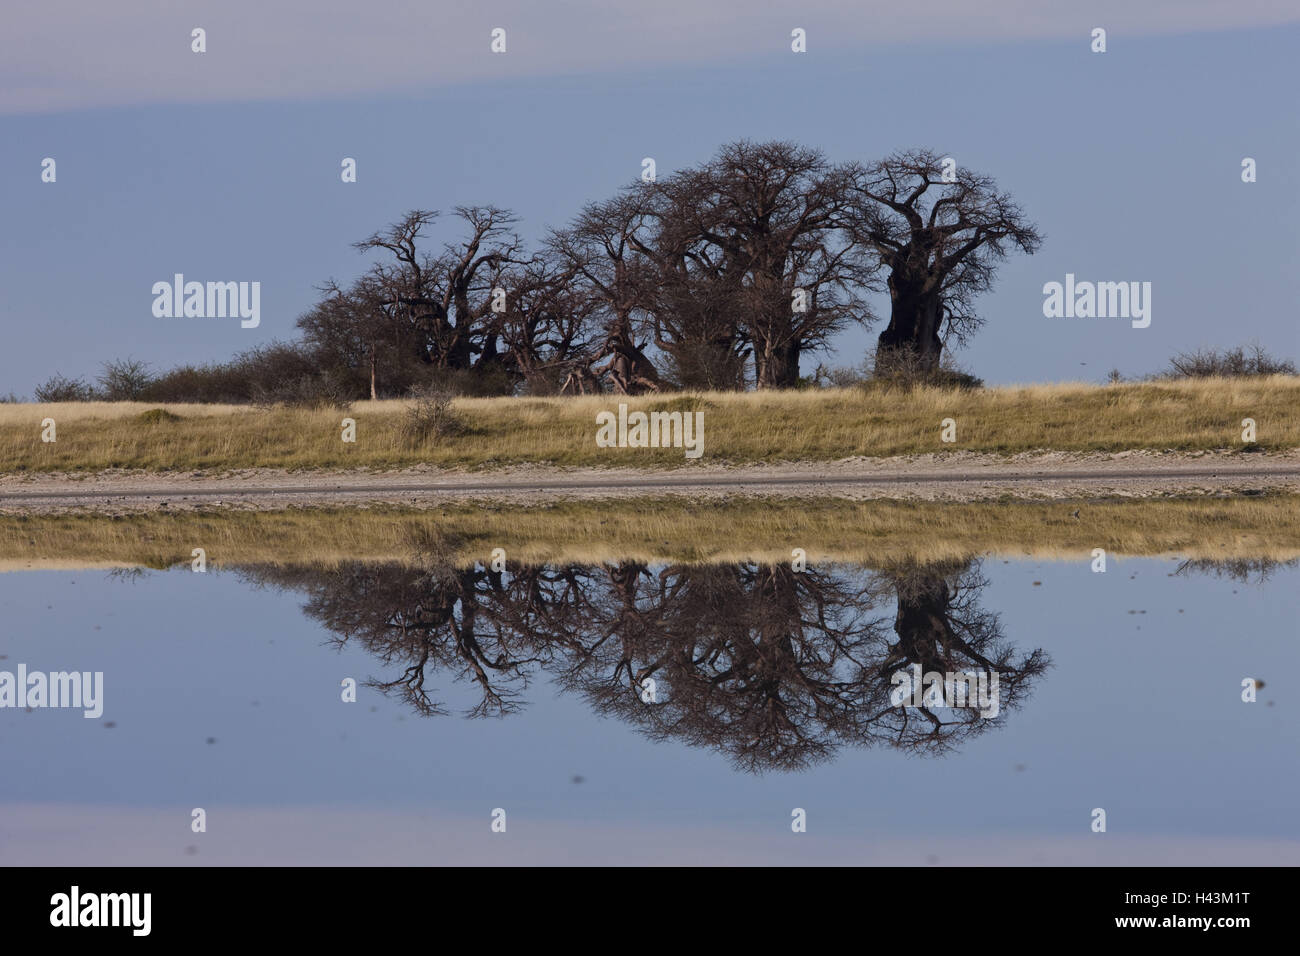 Africa, Botswana, North west District, Nxai-Pan national park, Baines-Baobabs, Adansonia digitata, water, mirroring, Stock Photo